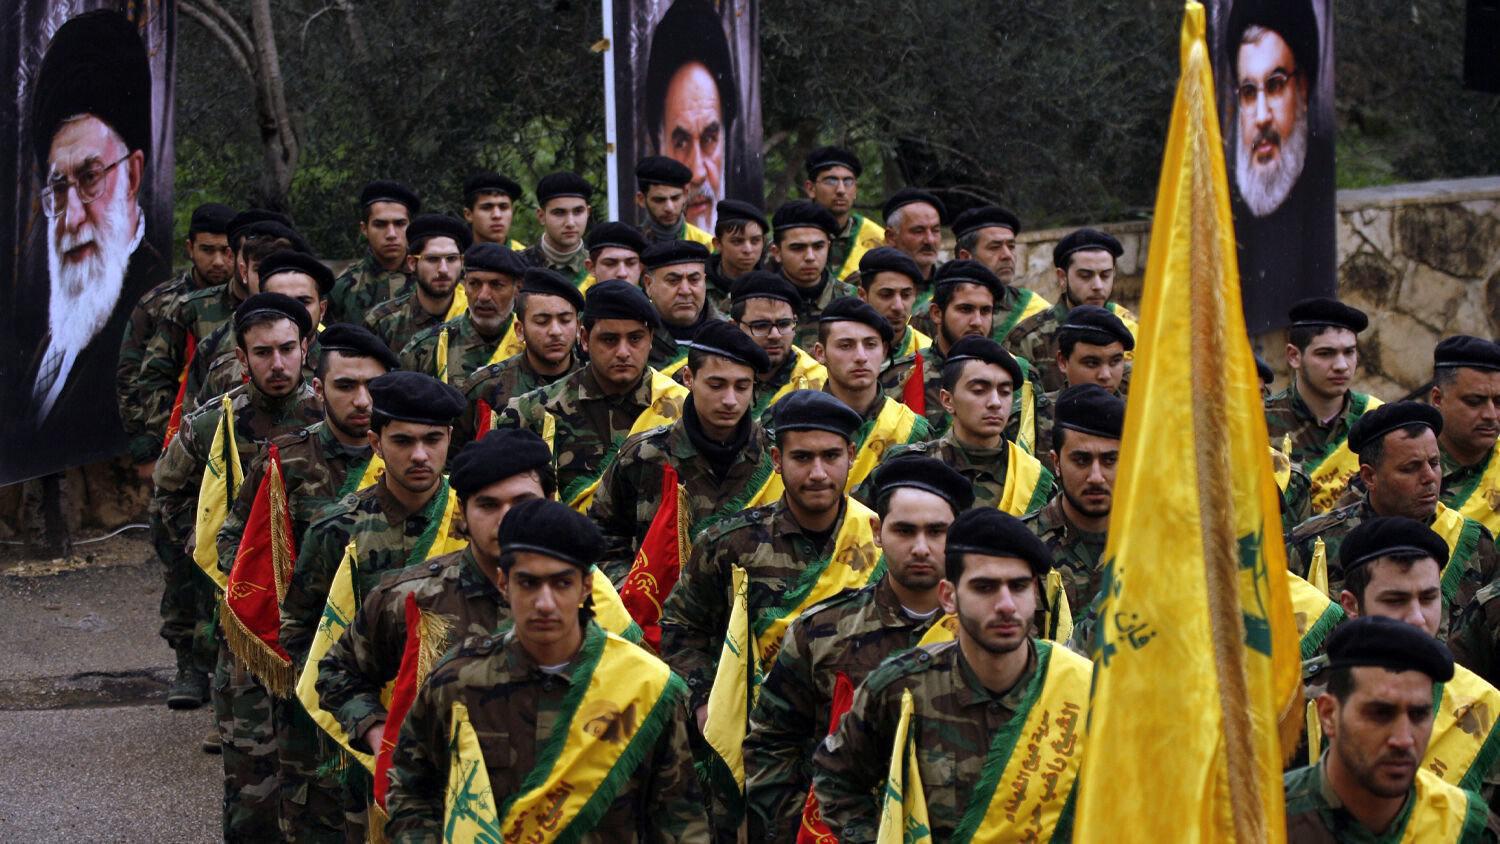 ifmat - Iran is still the head of the terrorist snake